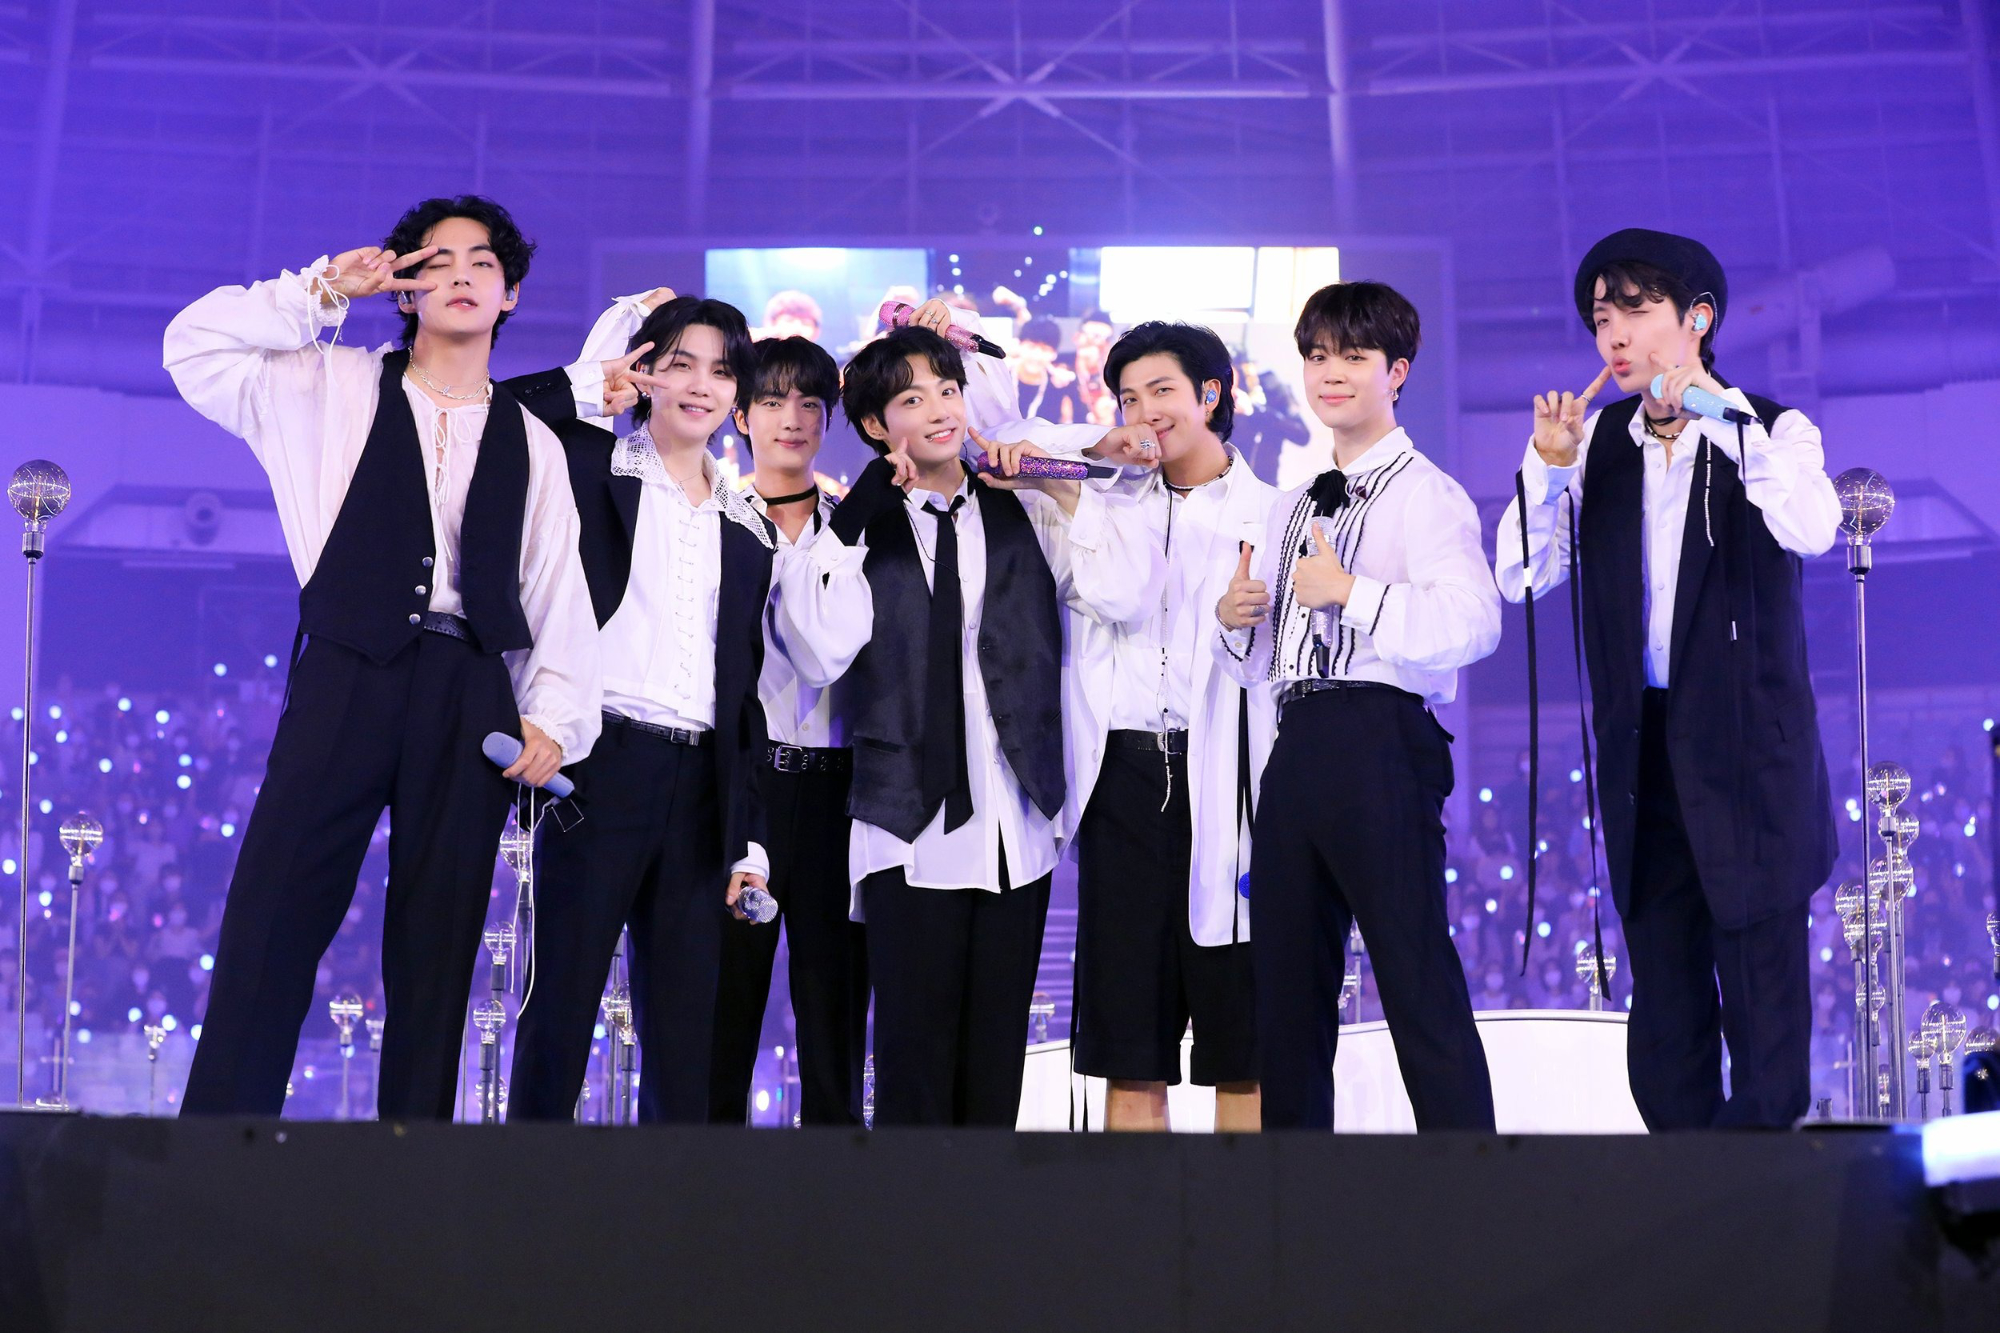 Boy band BTS seen posing on stage, including members RM, Jungkook, Jimin, V, Suga, Jin & J-Hope